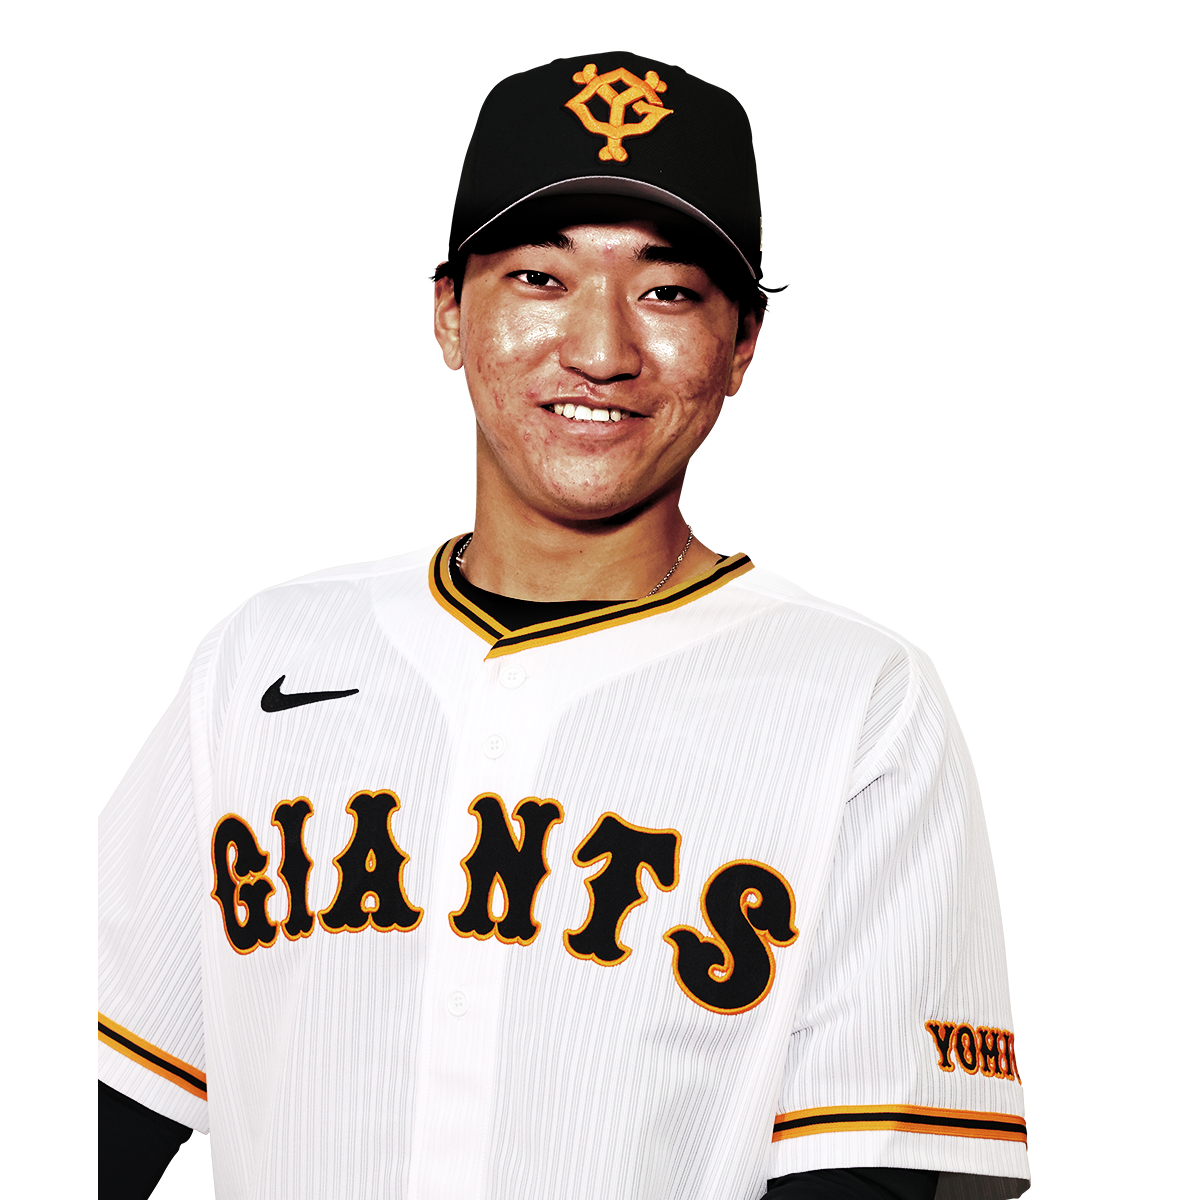 Official Yomiuri Giants baseball cap